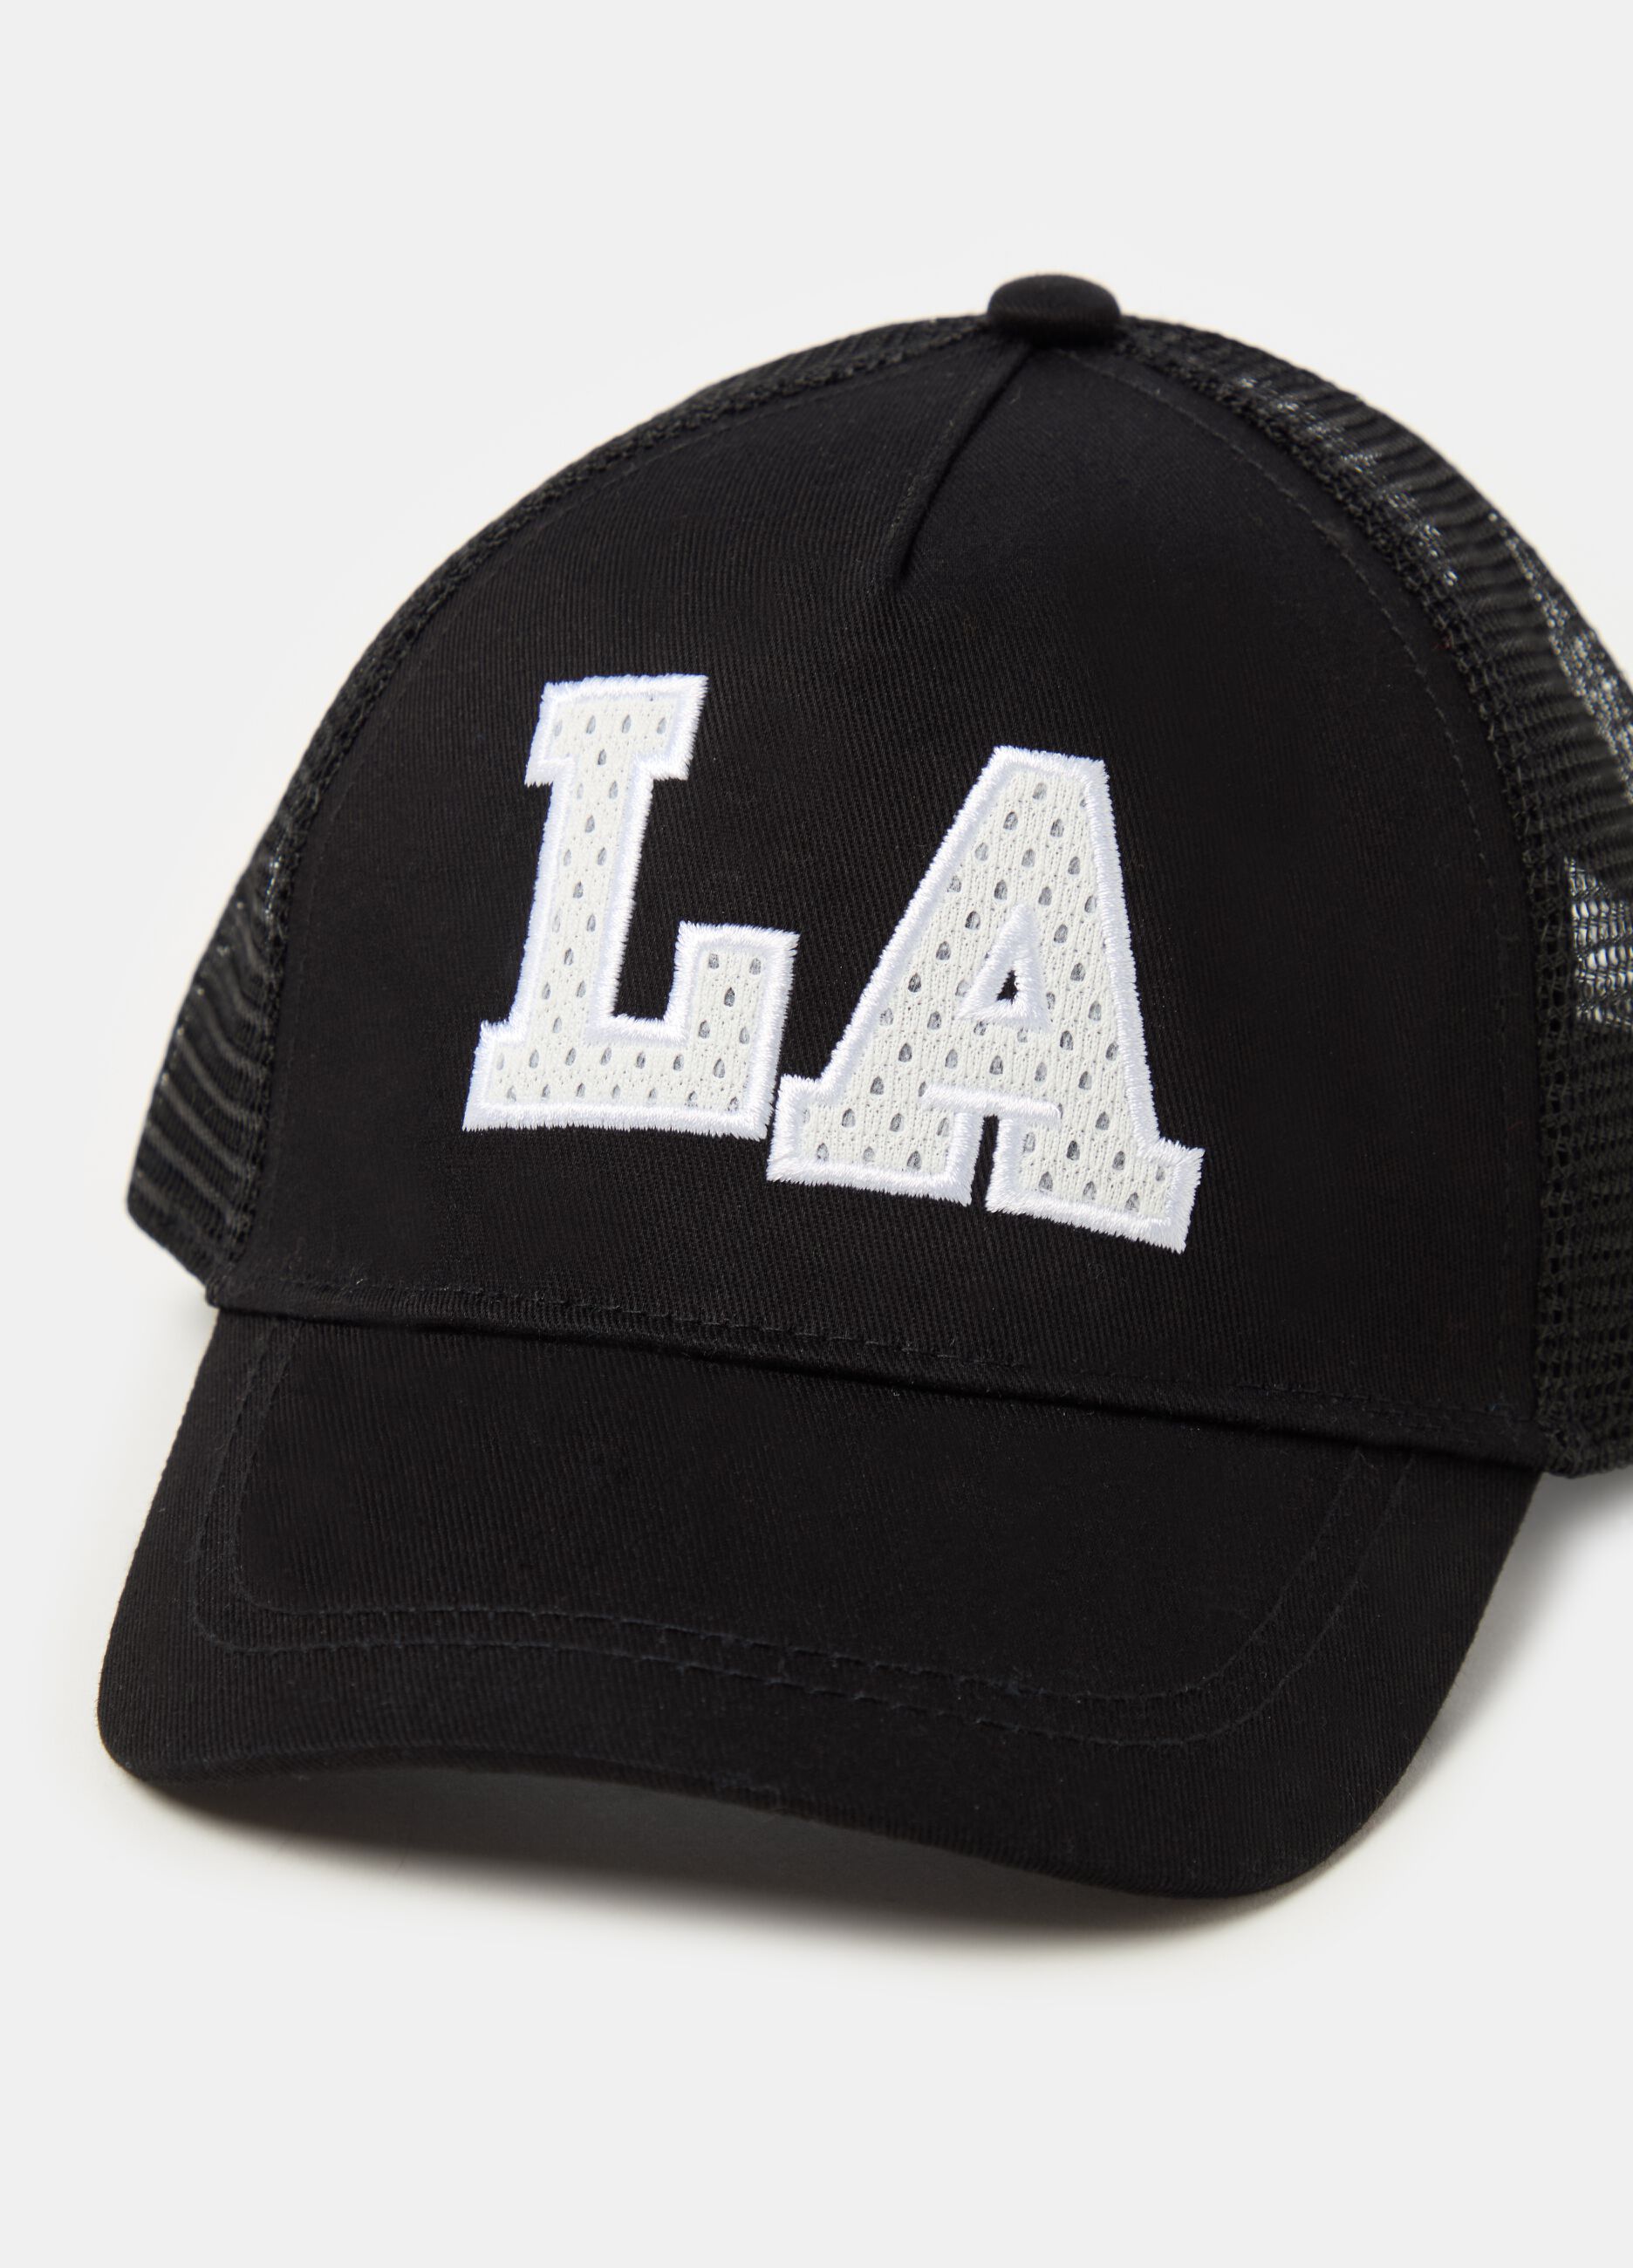 Baseball cap with LA embroidery